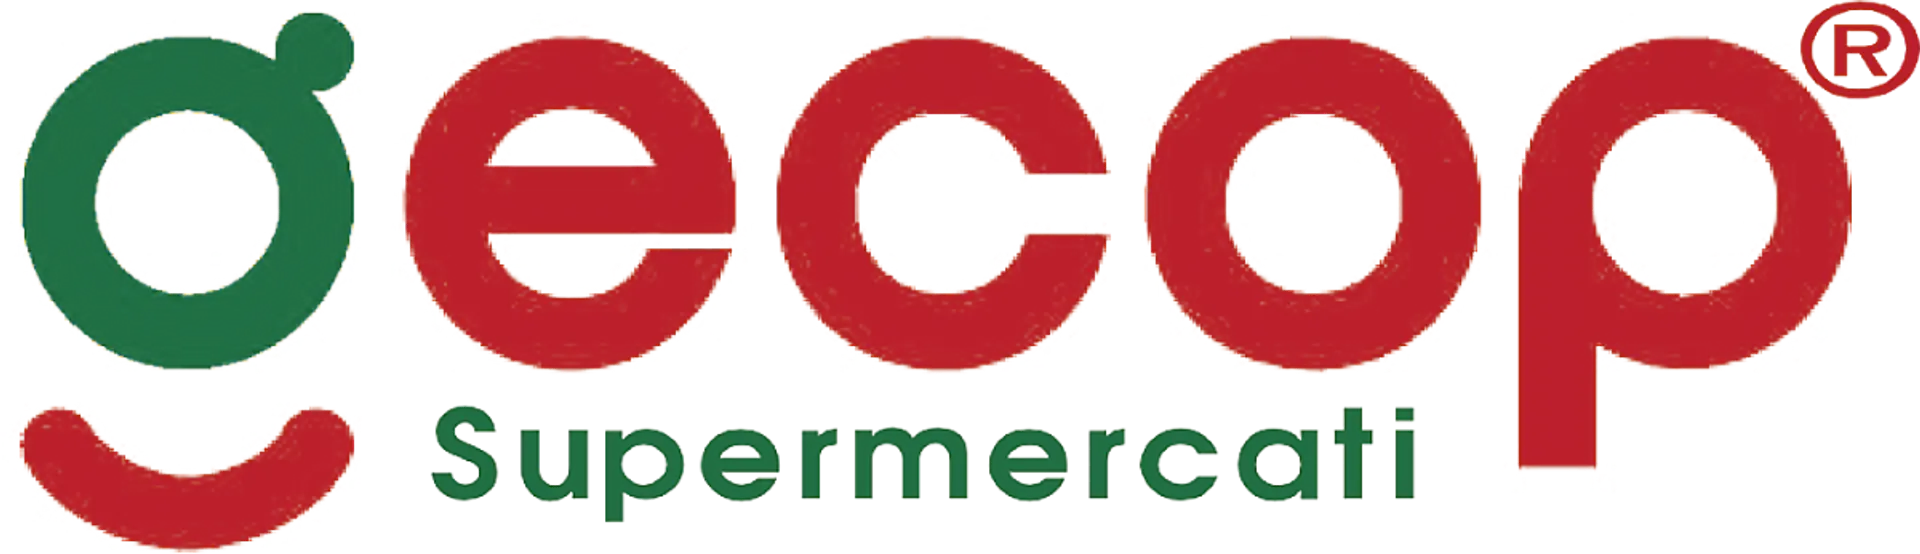 GECOP logo